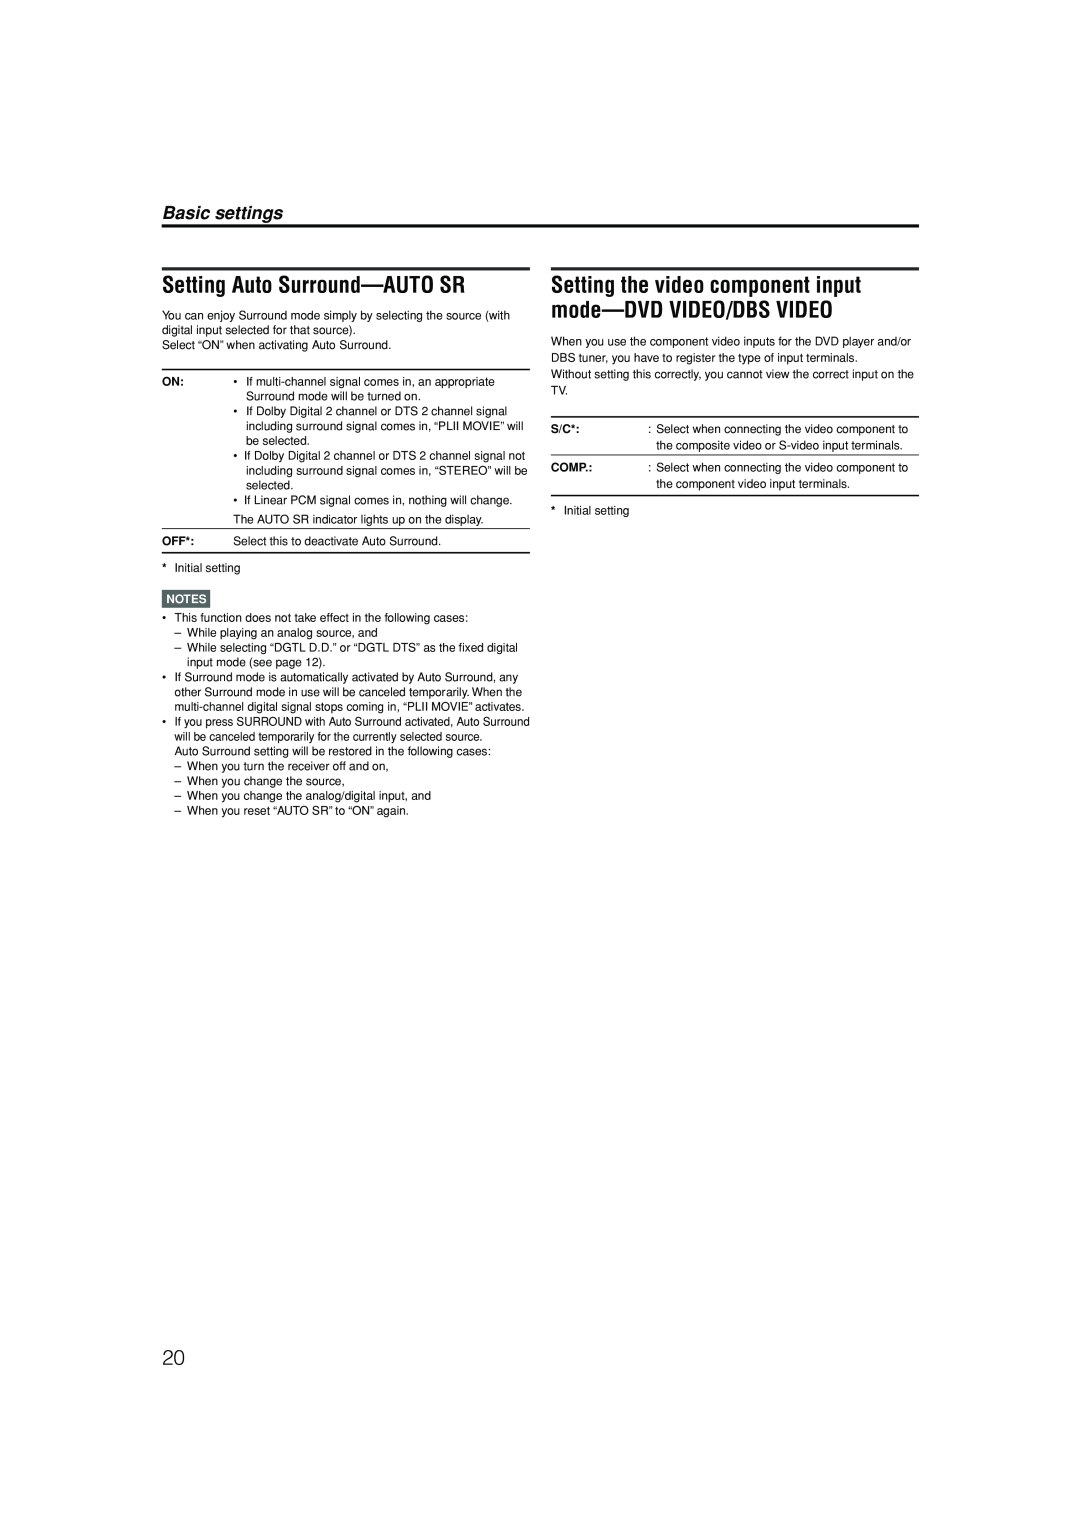 JVC RX-ES1SL manual Setting Auto Surround-AUTOSR, Basic settings, Notes 